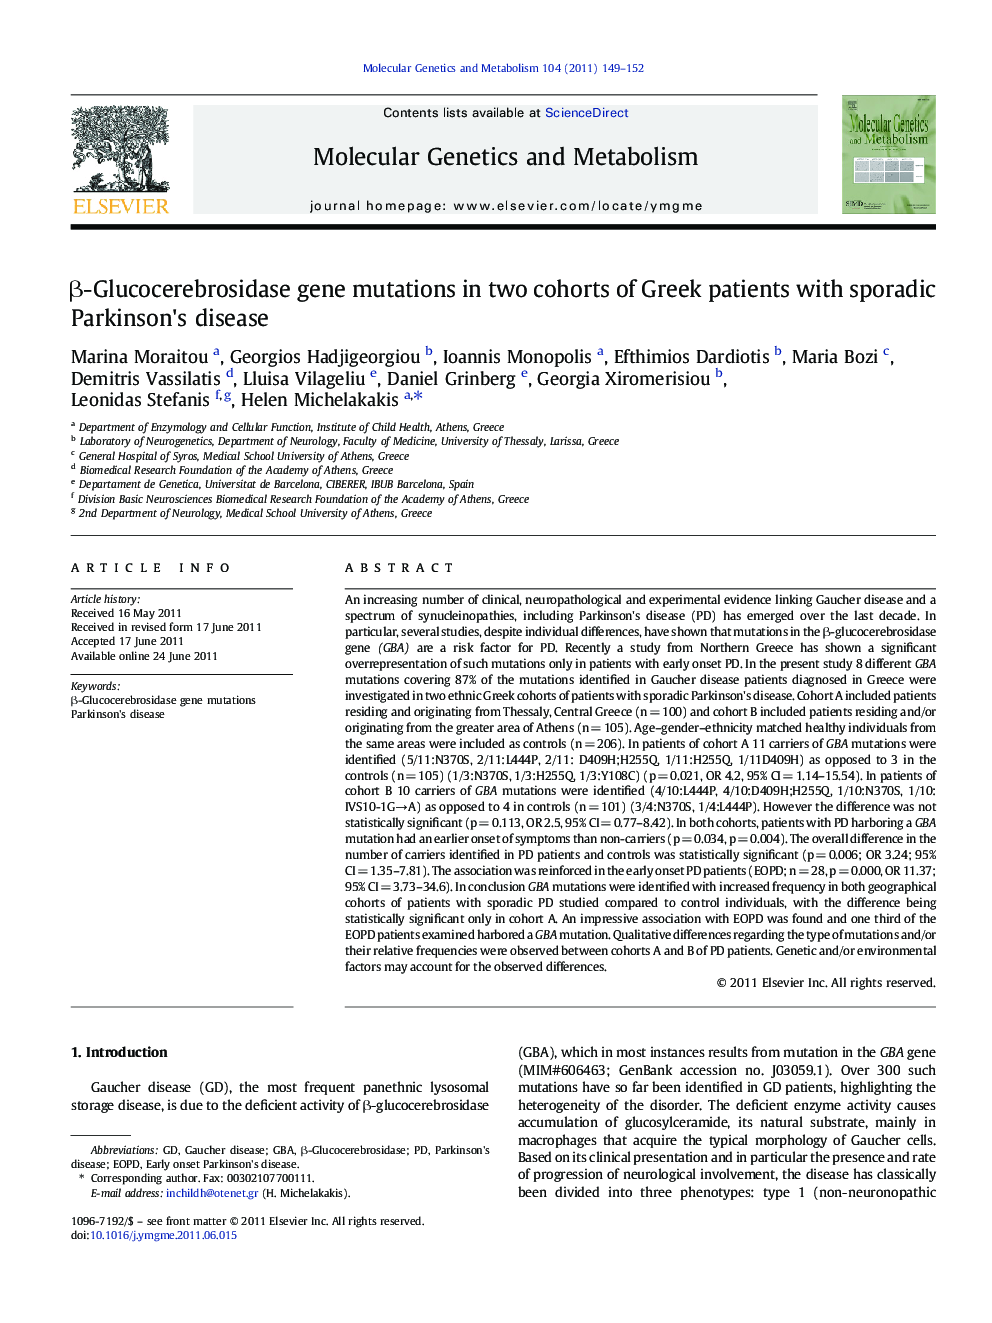 Î²-Glucocerebrosidase gene mutations in two cohorts of Greek patients with sporadic Parkinson's disease